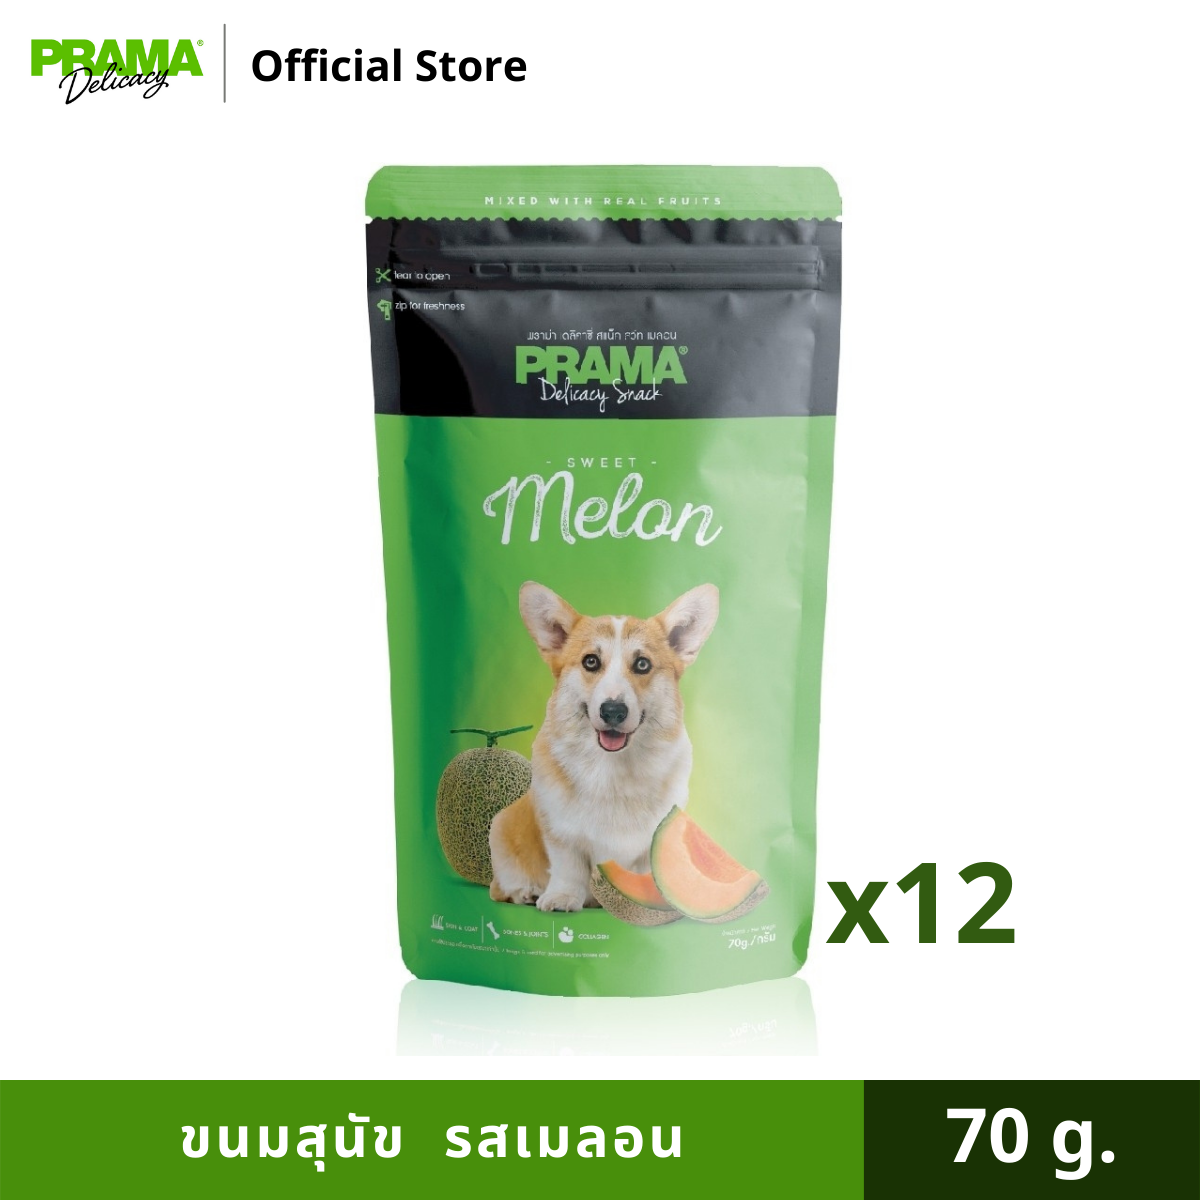 PRAMA Delicacy พราม่า เดลิคาซี่ รสเมลอน ขนมสุนัข ขนาด 70 กรัม - 12 ซอง / Box